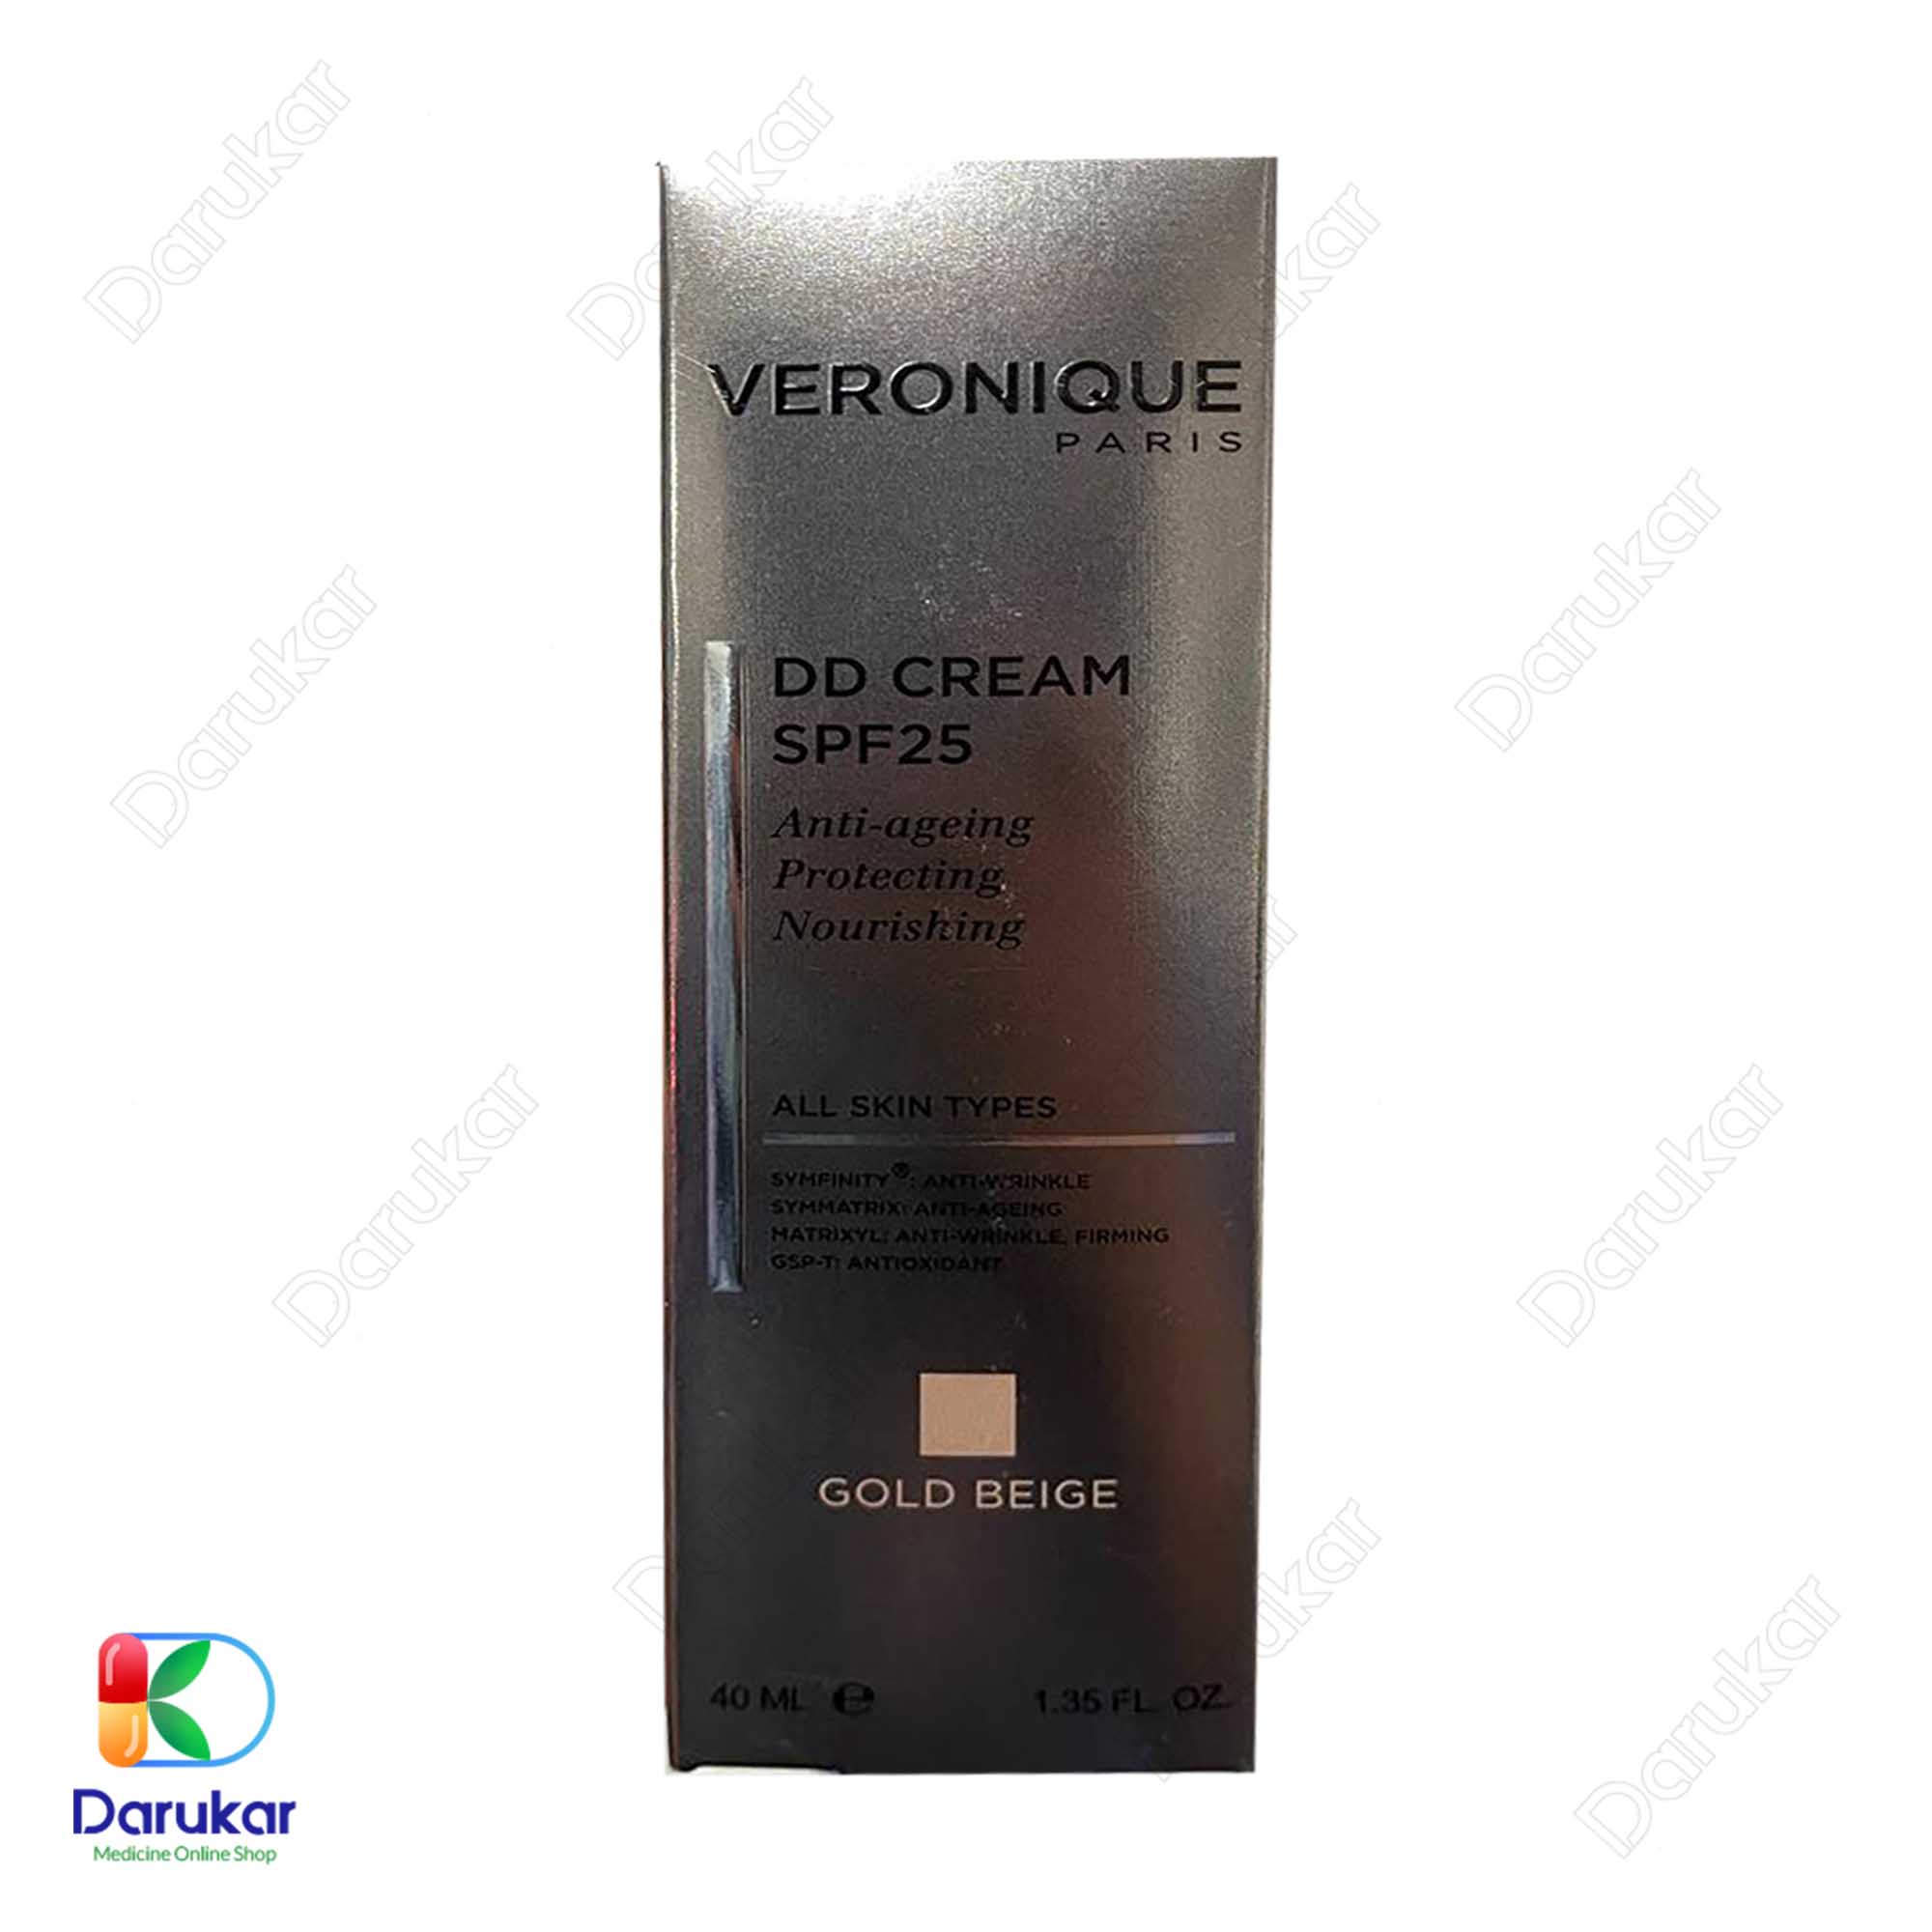 Veronique DD Cream SPF25 40 ml 3